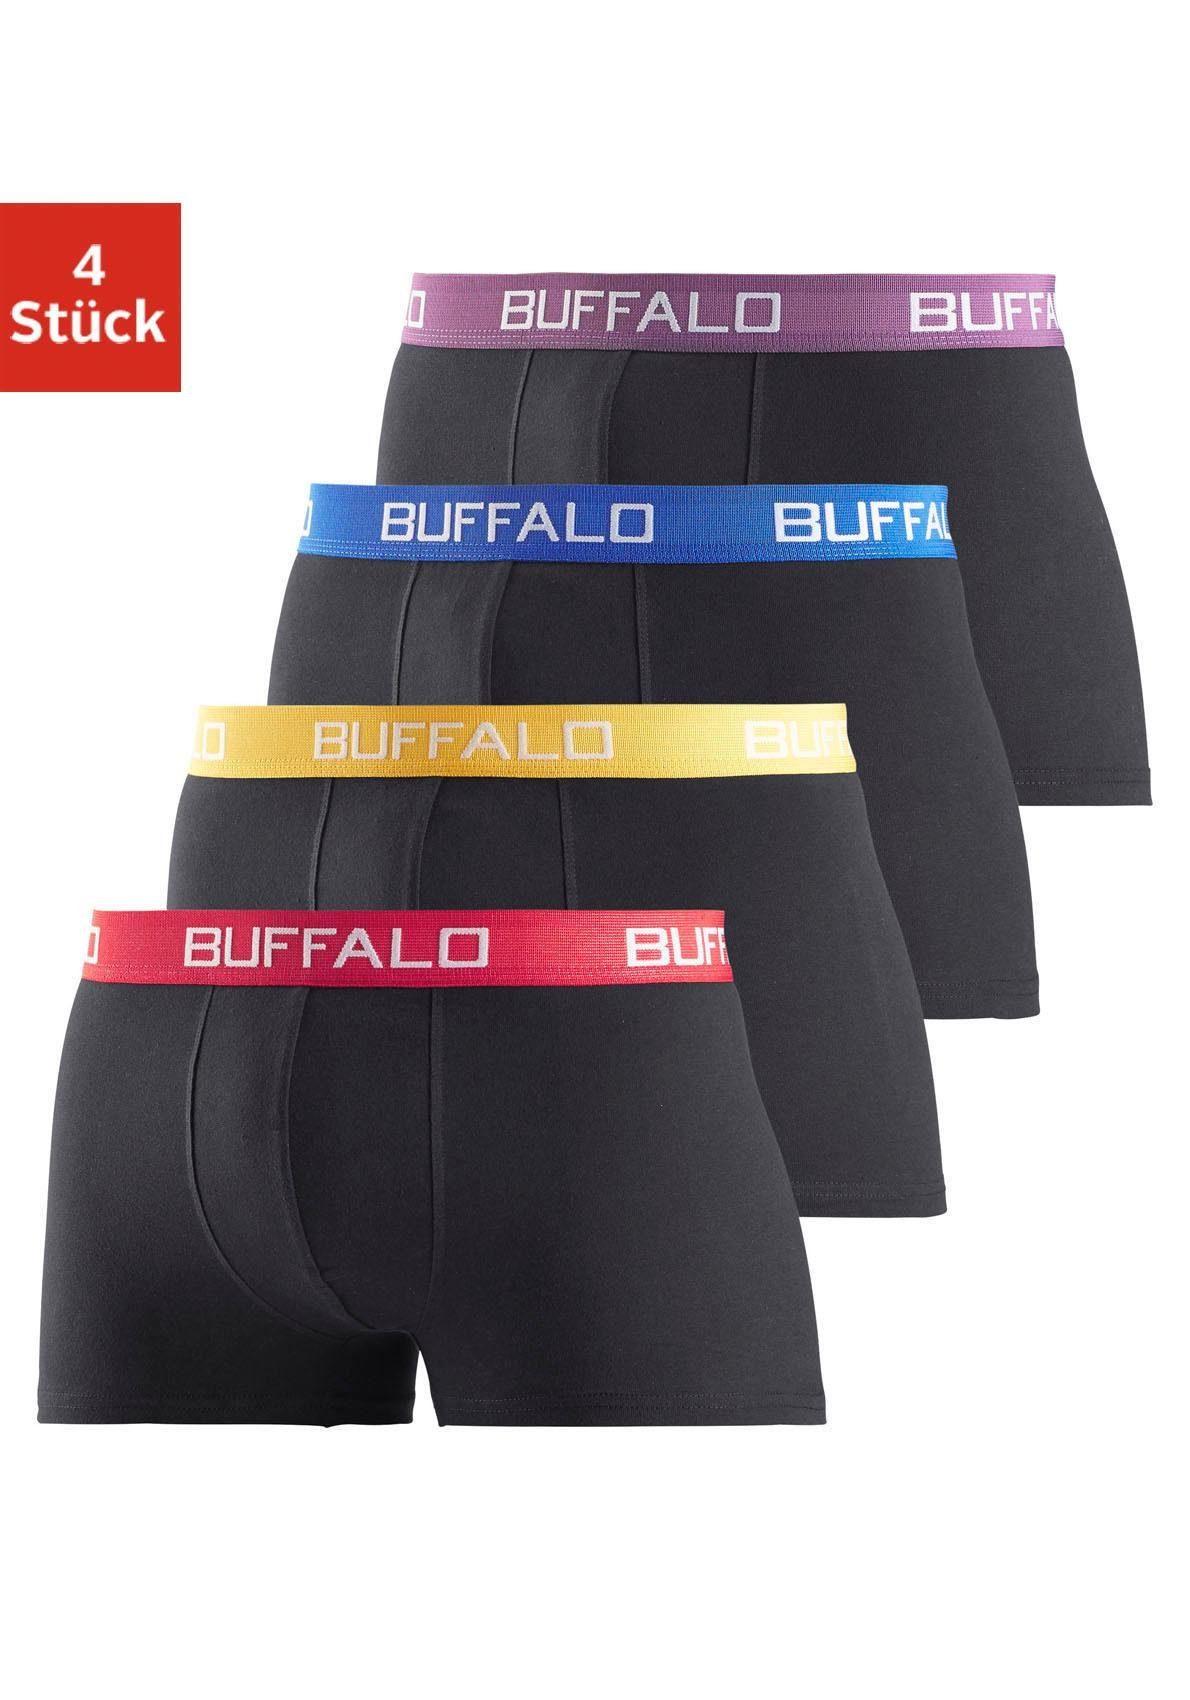 unifarbene Pants Boxer Retro Buffalo (Packung, 4-St) schwarz-bunt